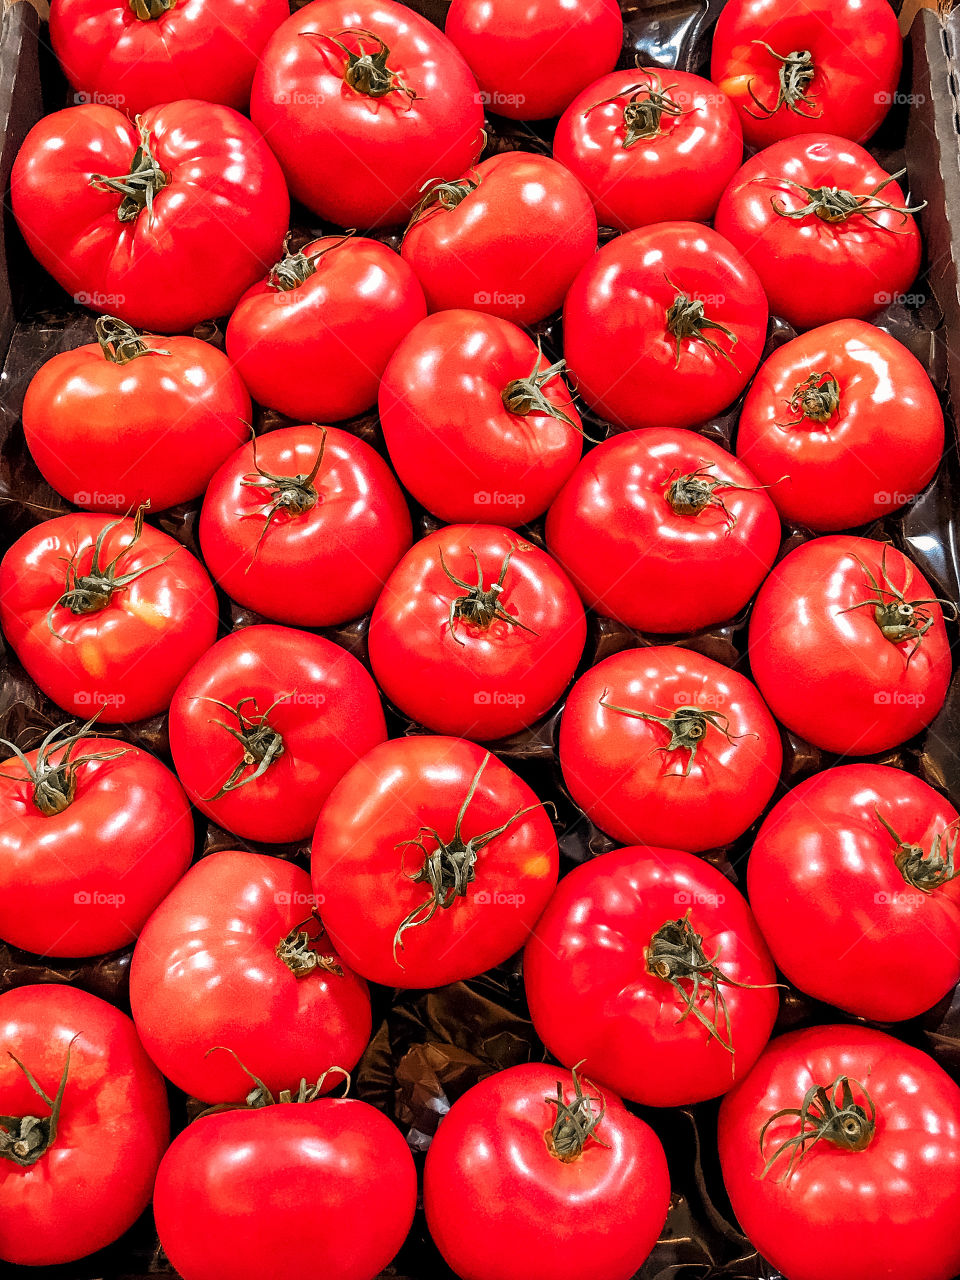 Fresh tomatoes on the shop shelf